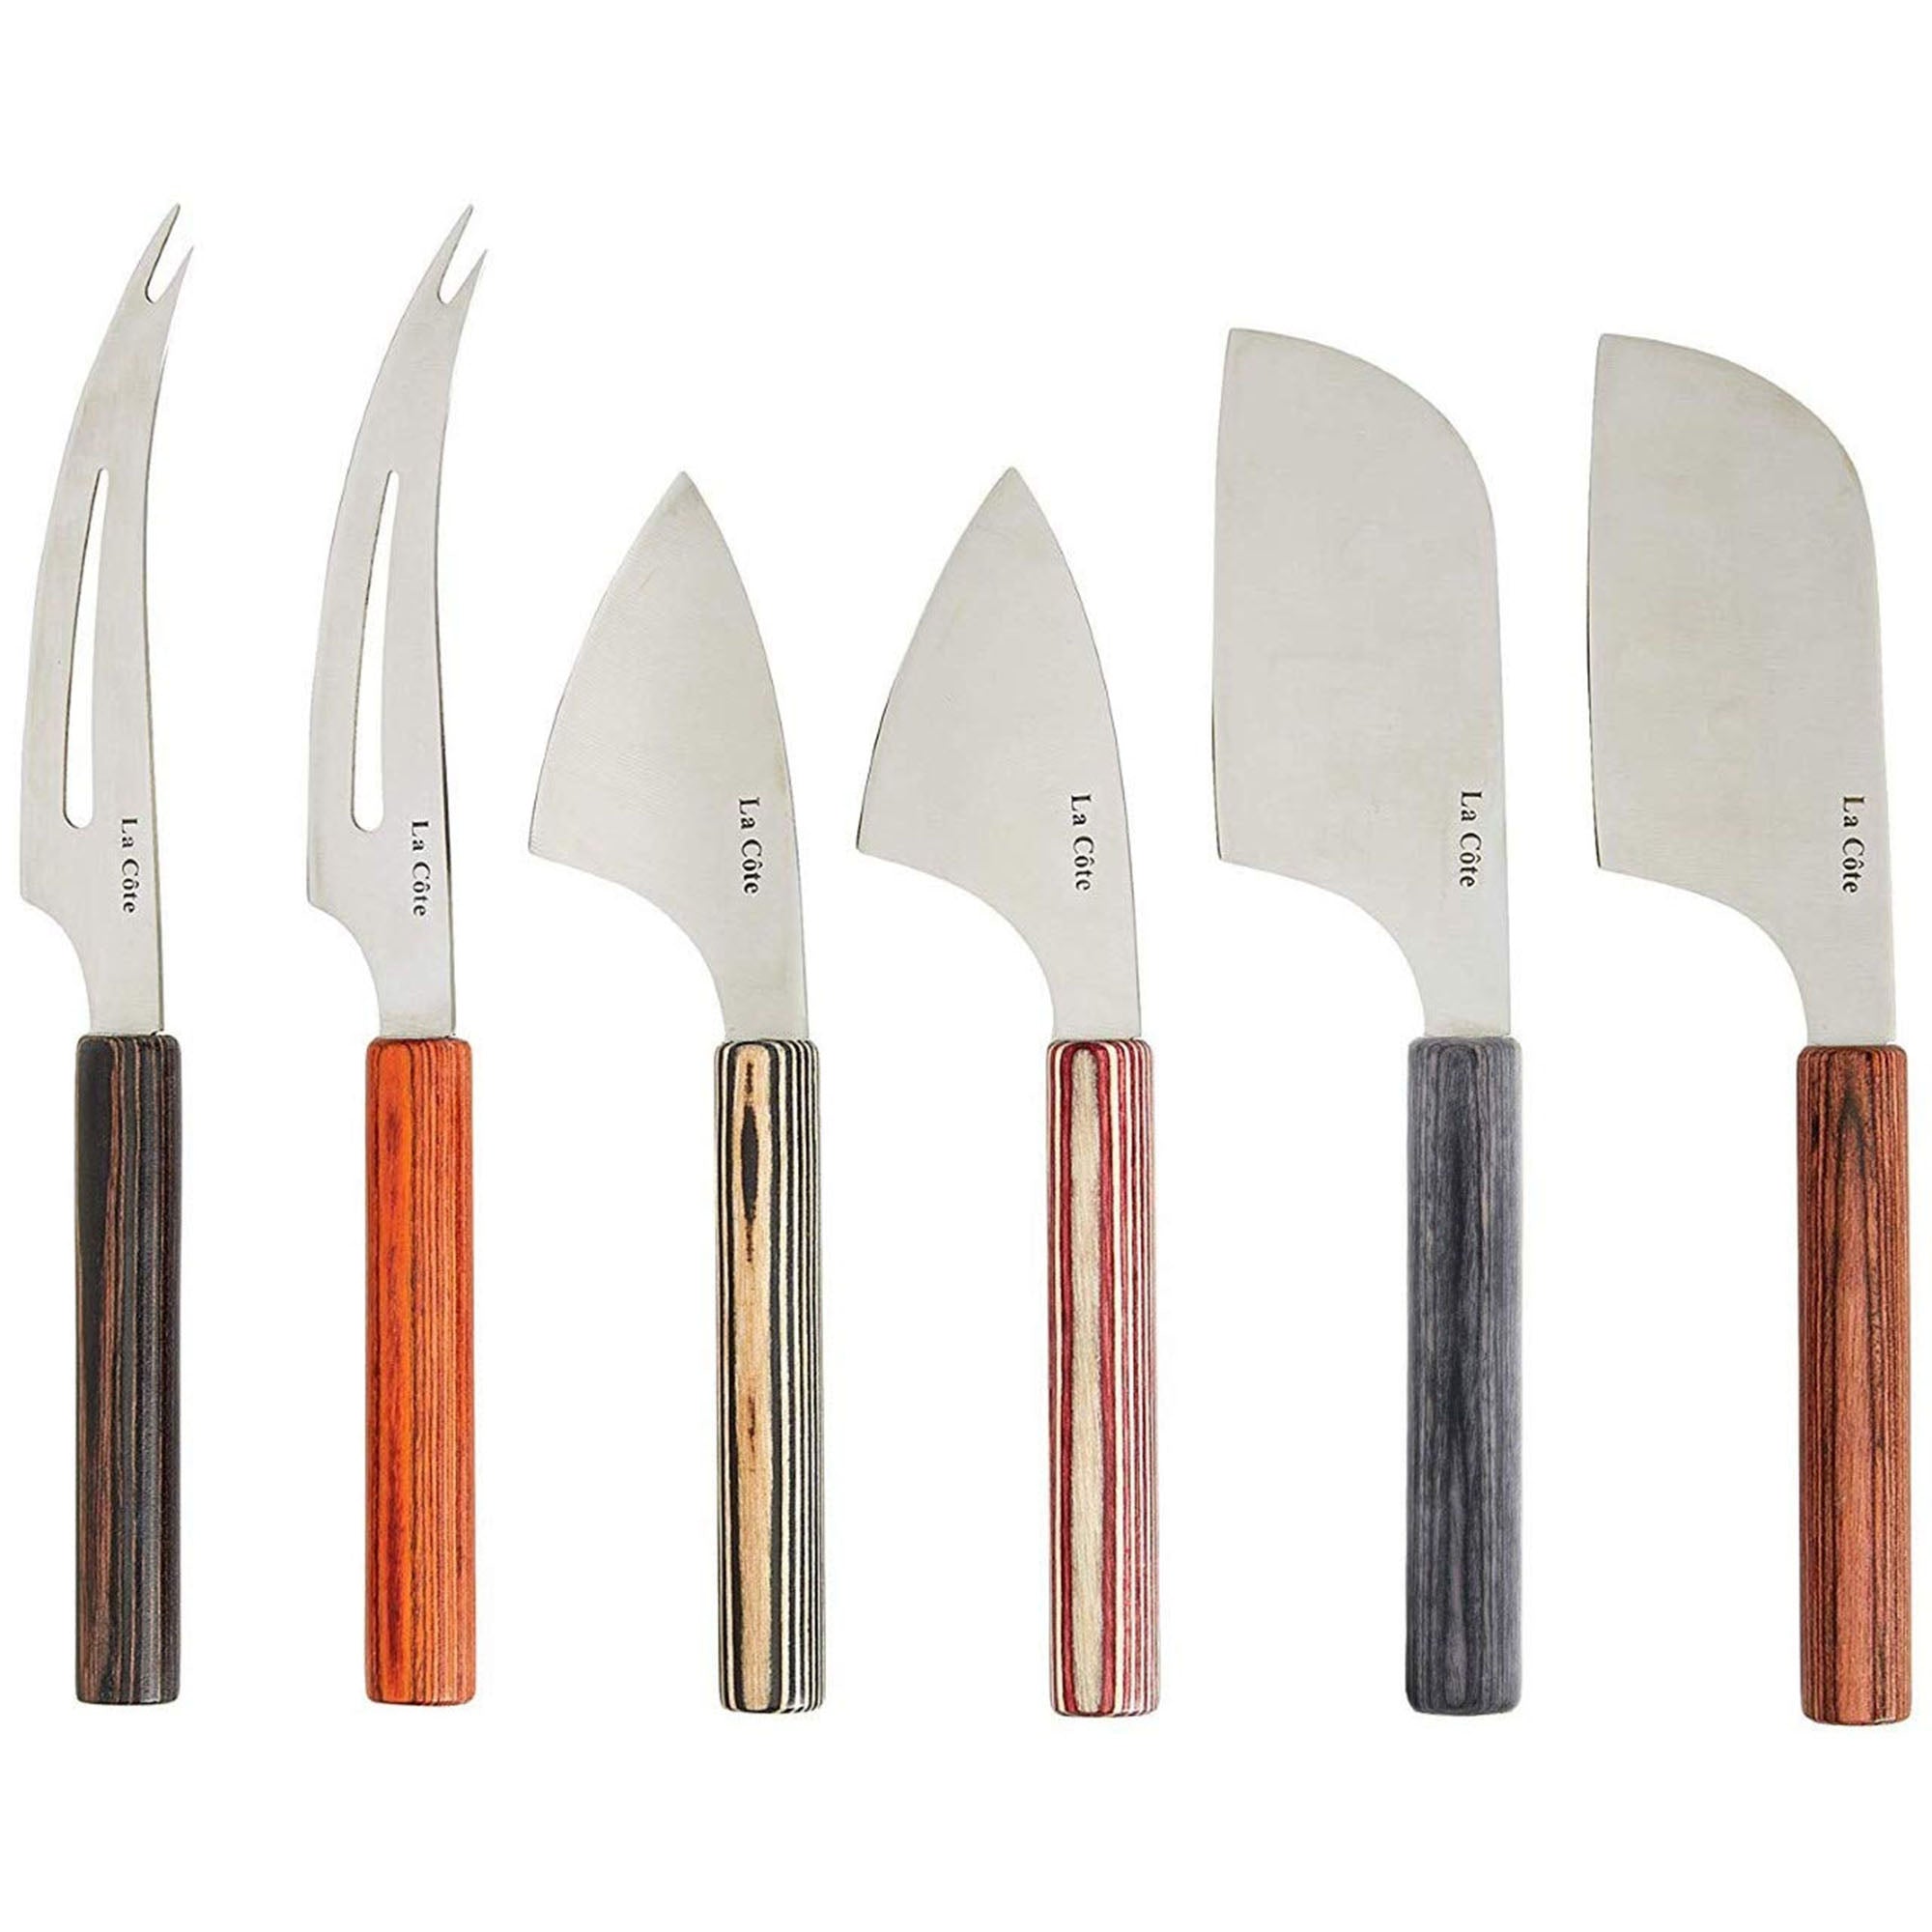 La Cote 6 Piece Cheese Knife Set Stainless Steel Blade Pakka Wood Handle (8 inch)